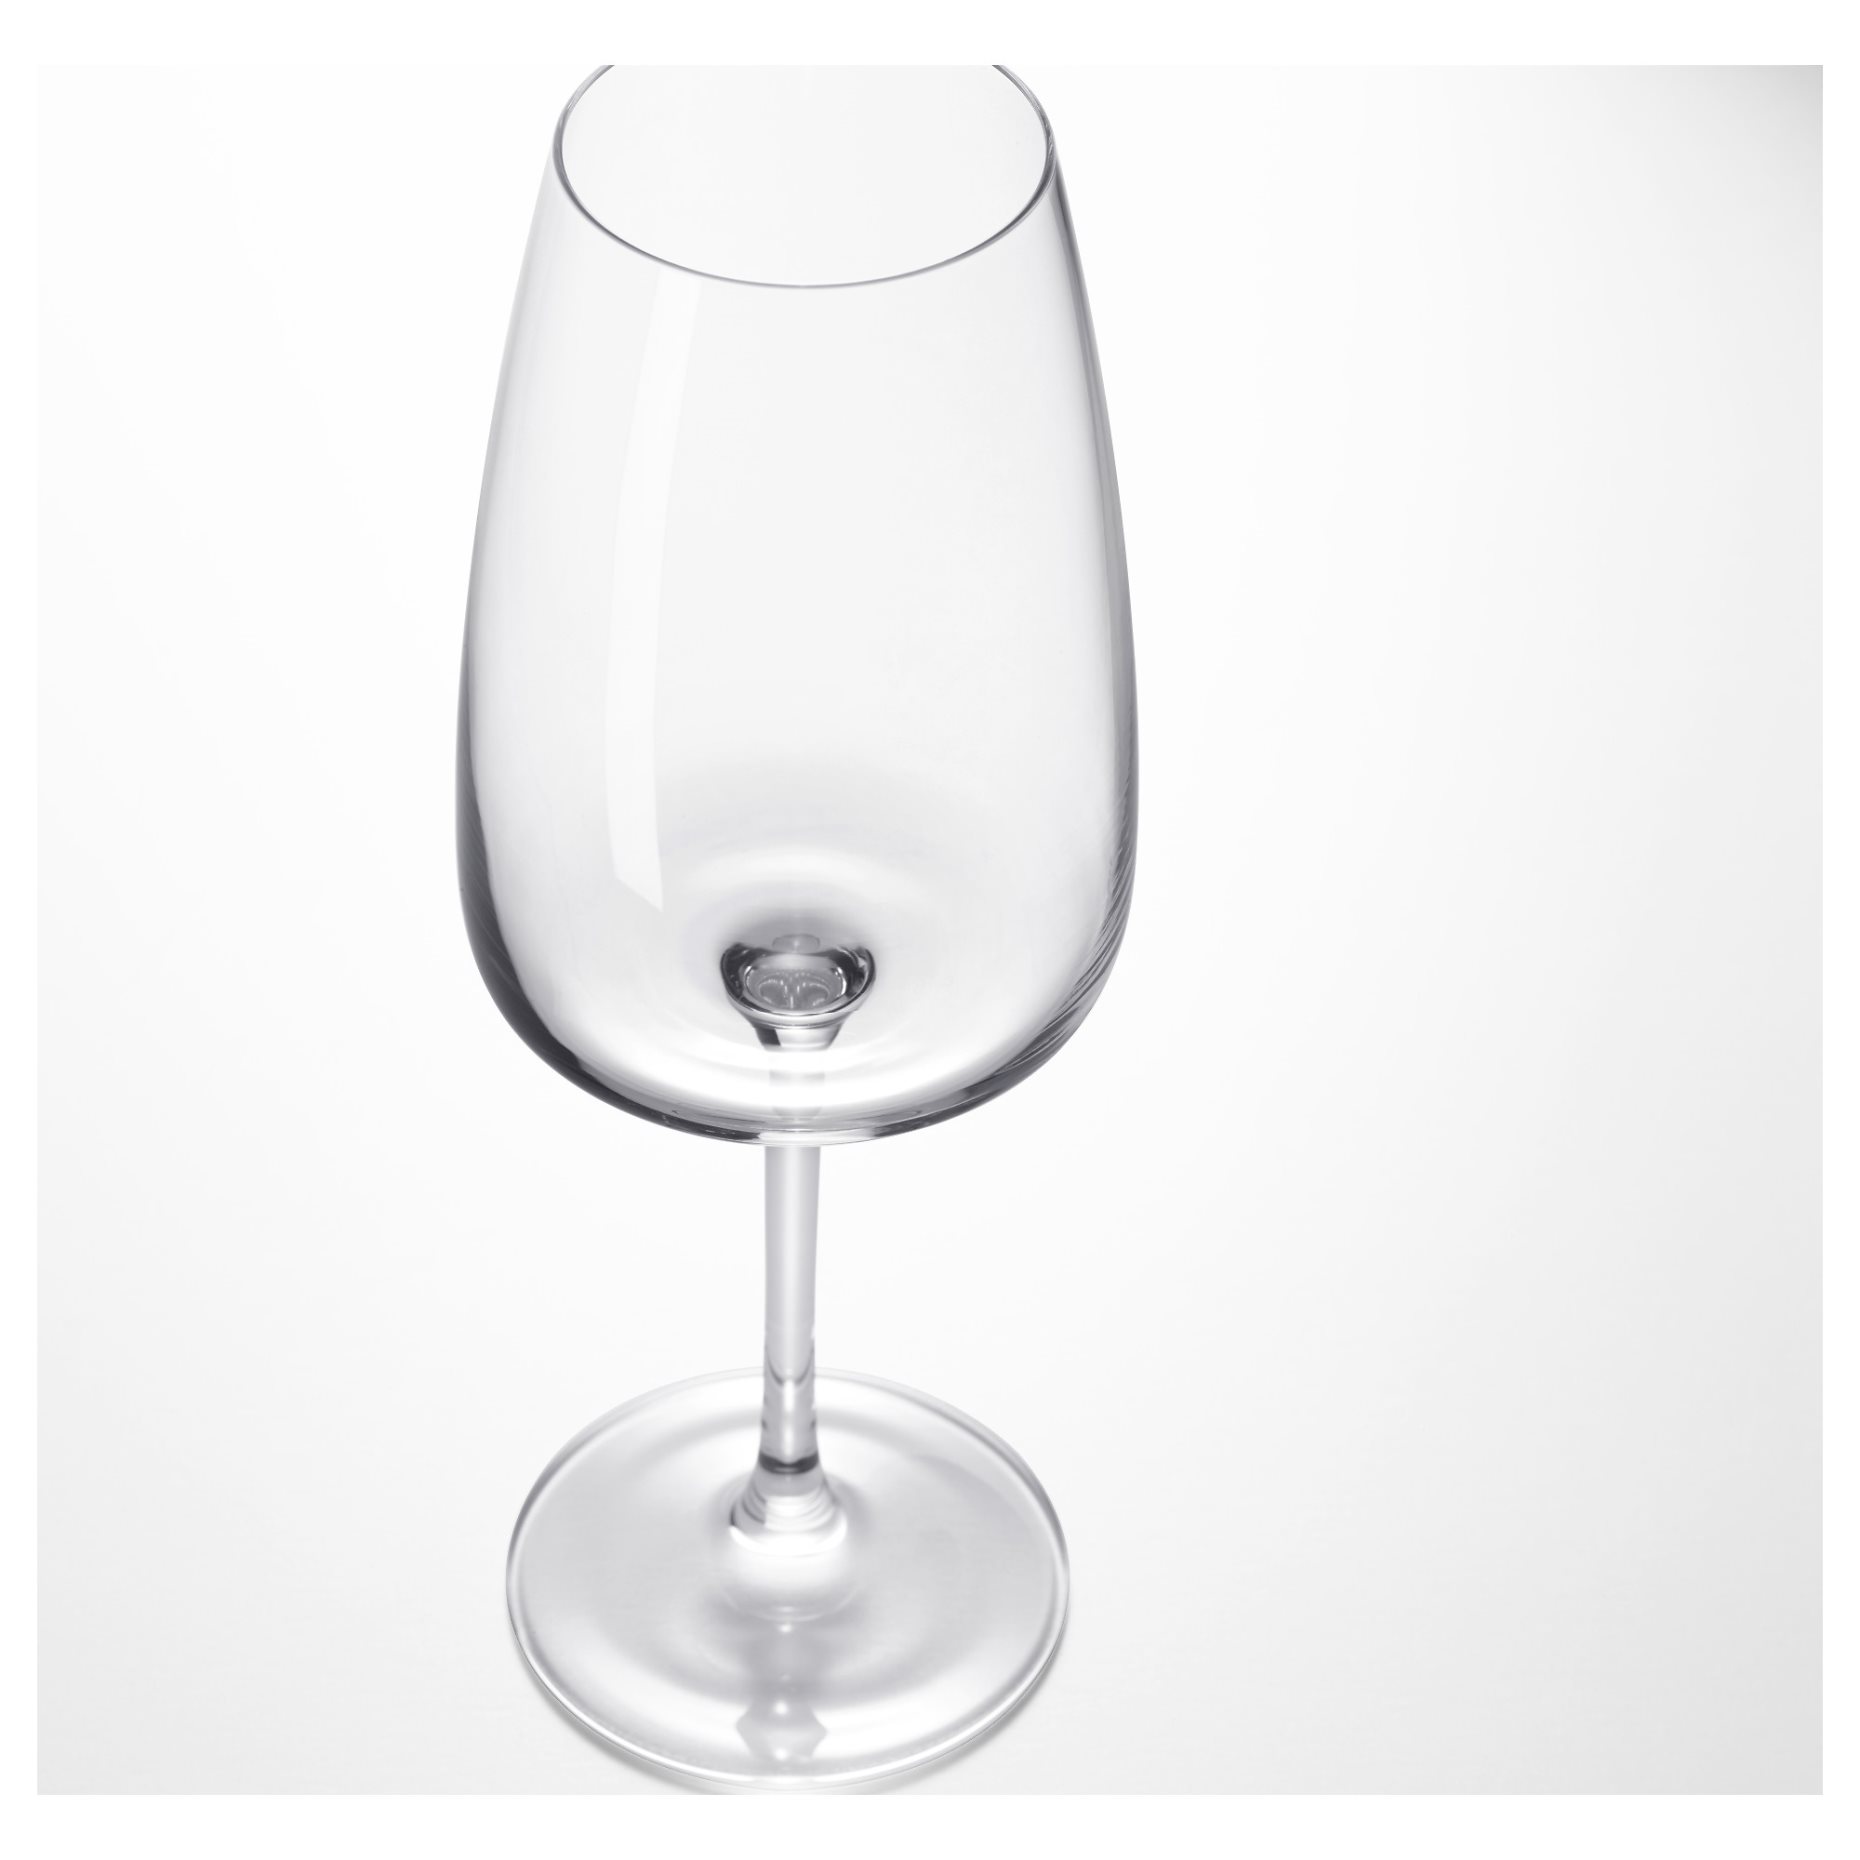 DYRGRIP, чаша за бяло вино, 420мл, 803.093.02